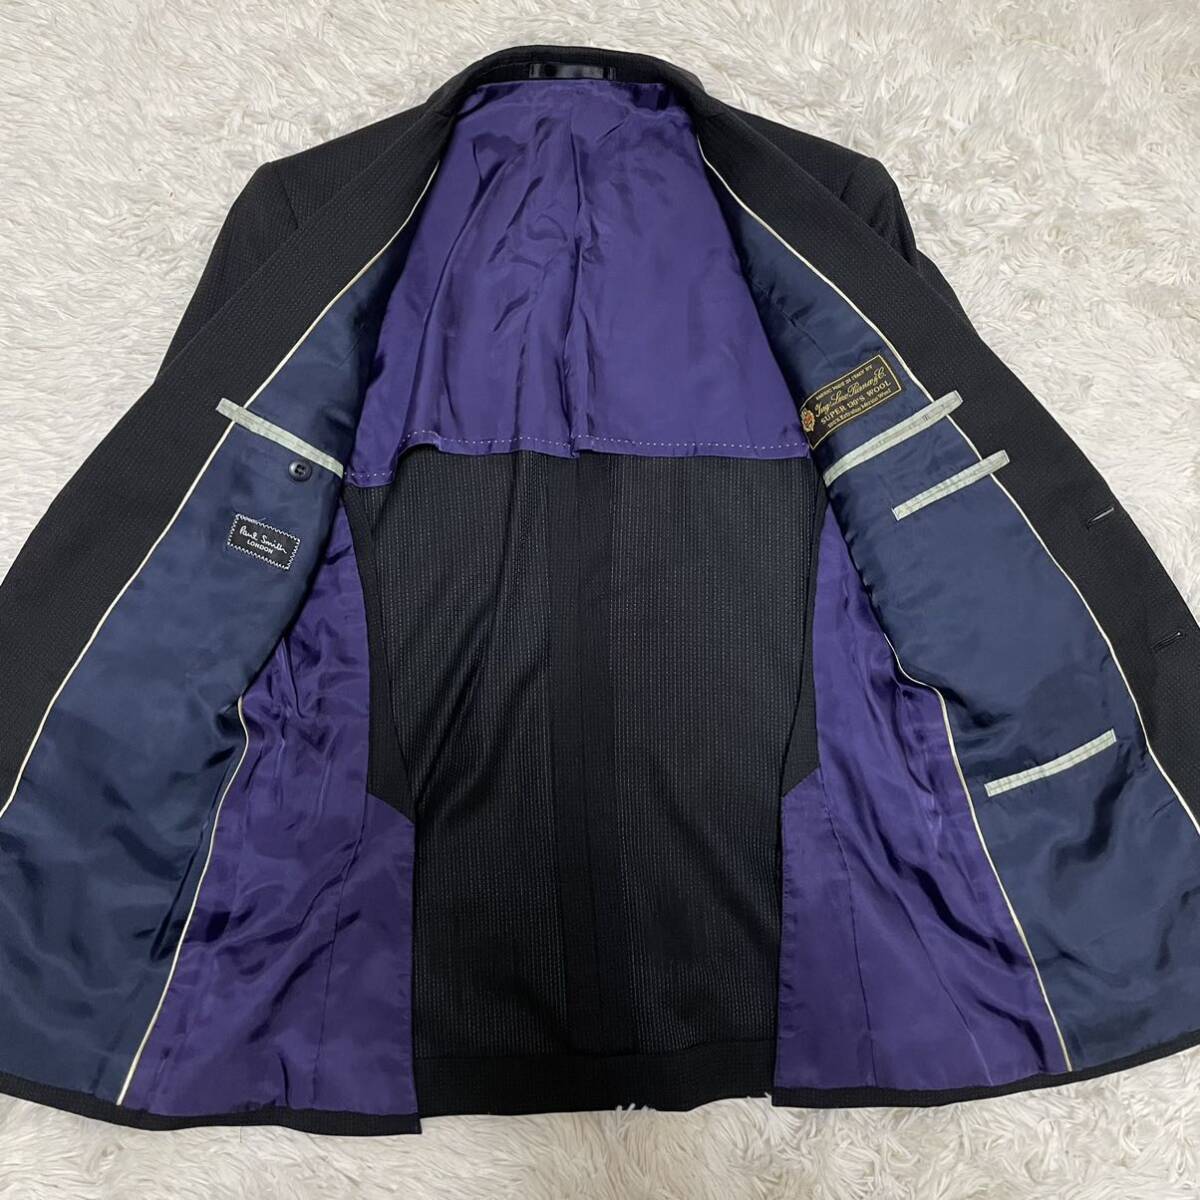  Loro Piana *Paul Smith Paul Smith Super130\'s suit setup dot Loro Piana lining purple black black wool jacket 